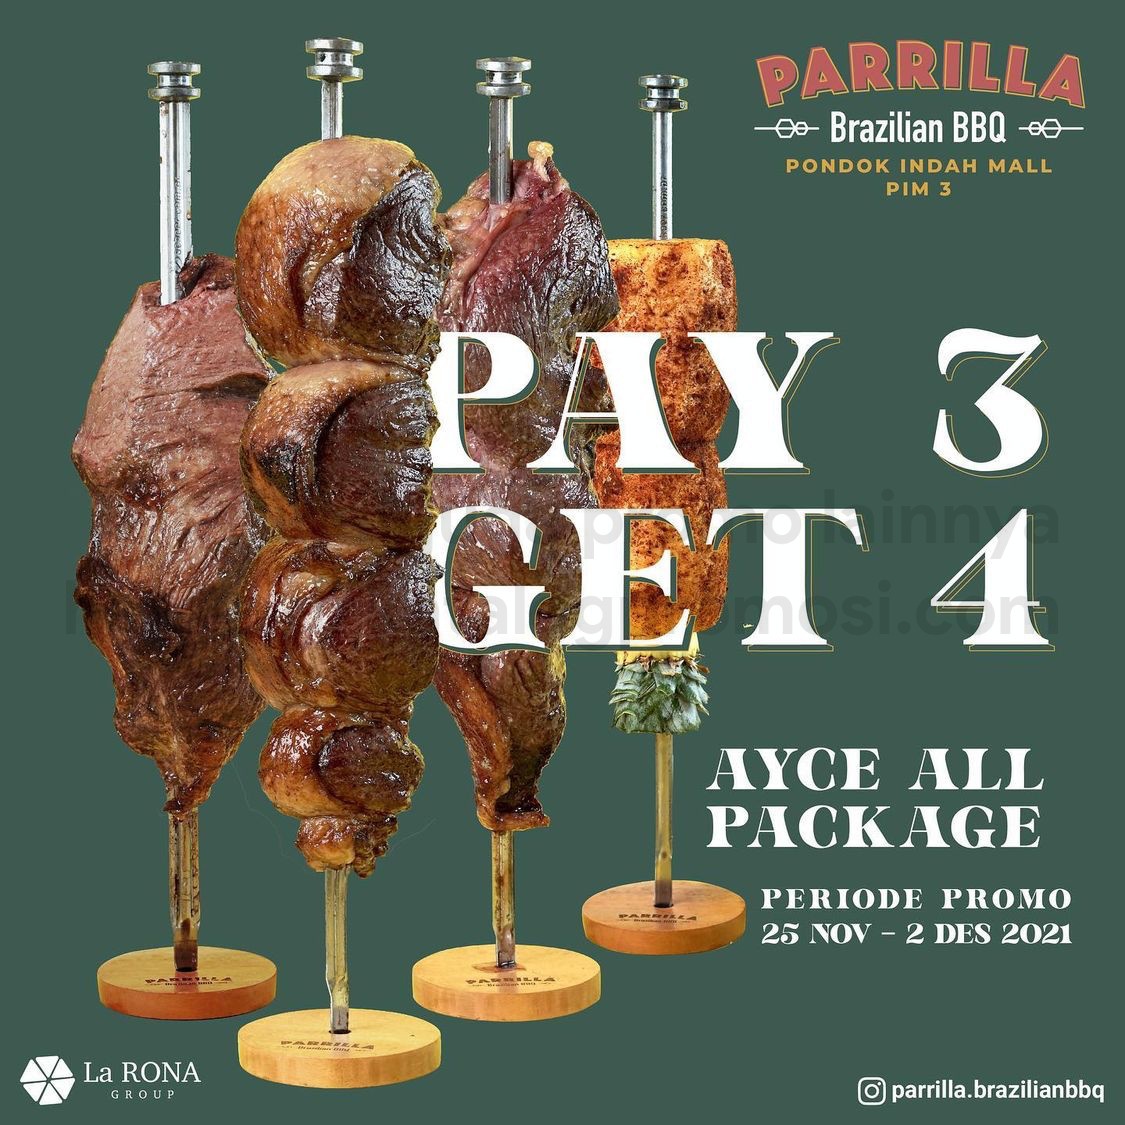 Promo Parrilla Brazilian BBQ PONDOK INDAH MALL OPENING SPECIAL - PAY 3 GET 4 untuk semua PAKET ALL YOU CAN EAT